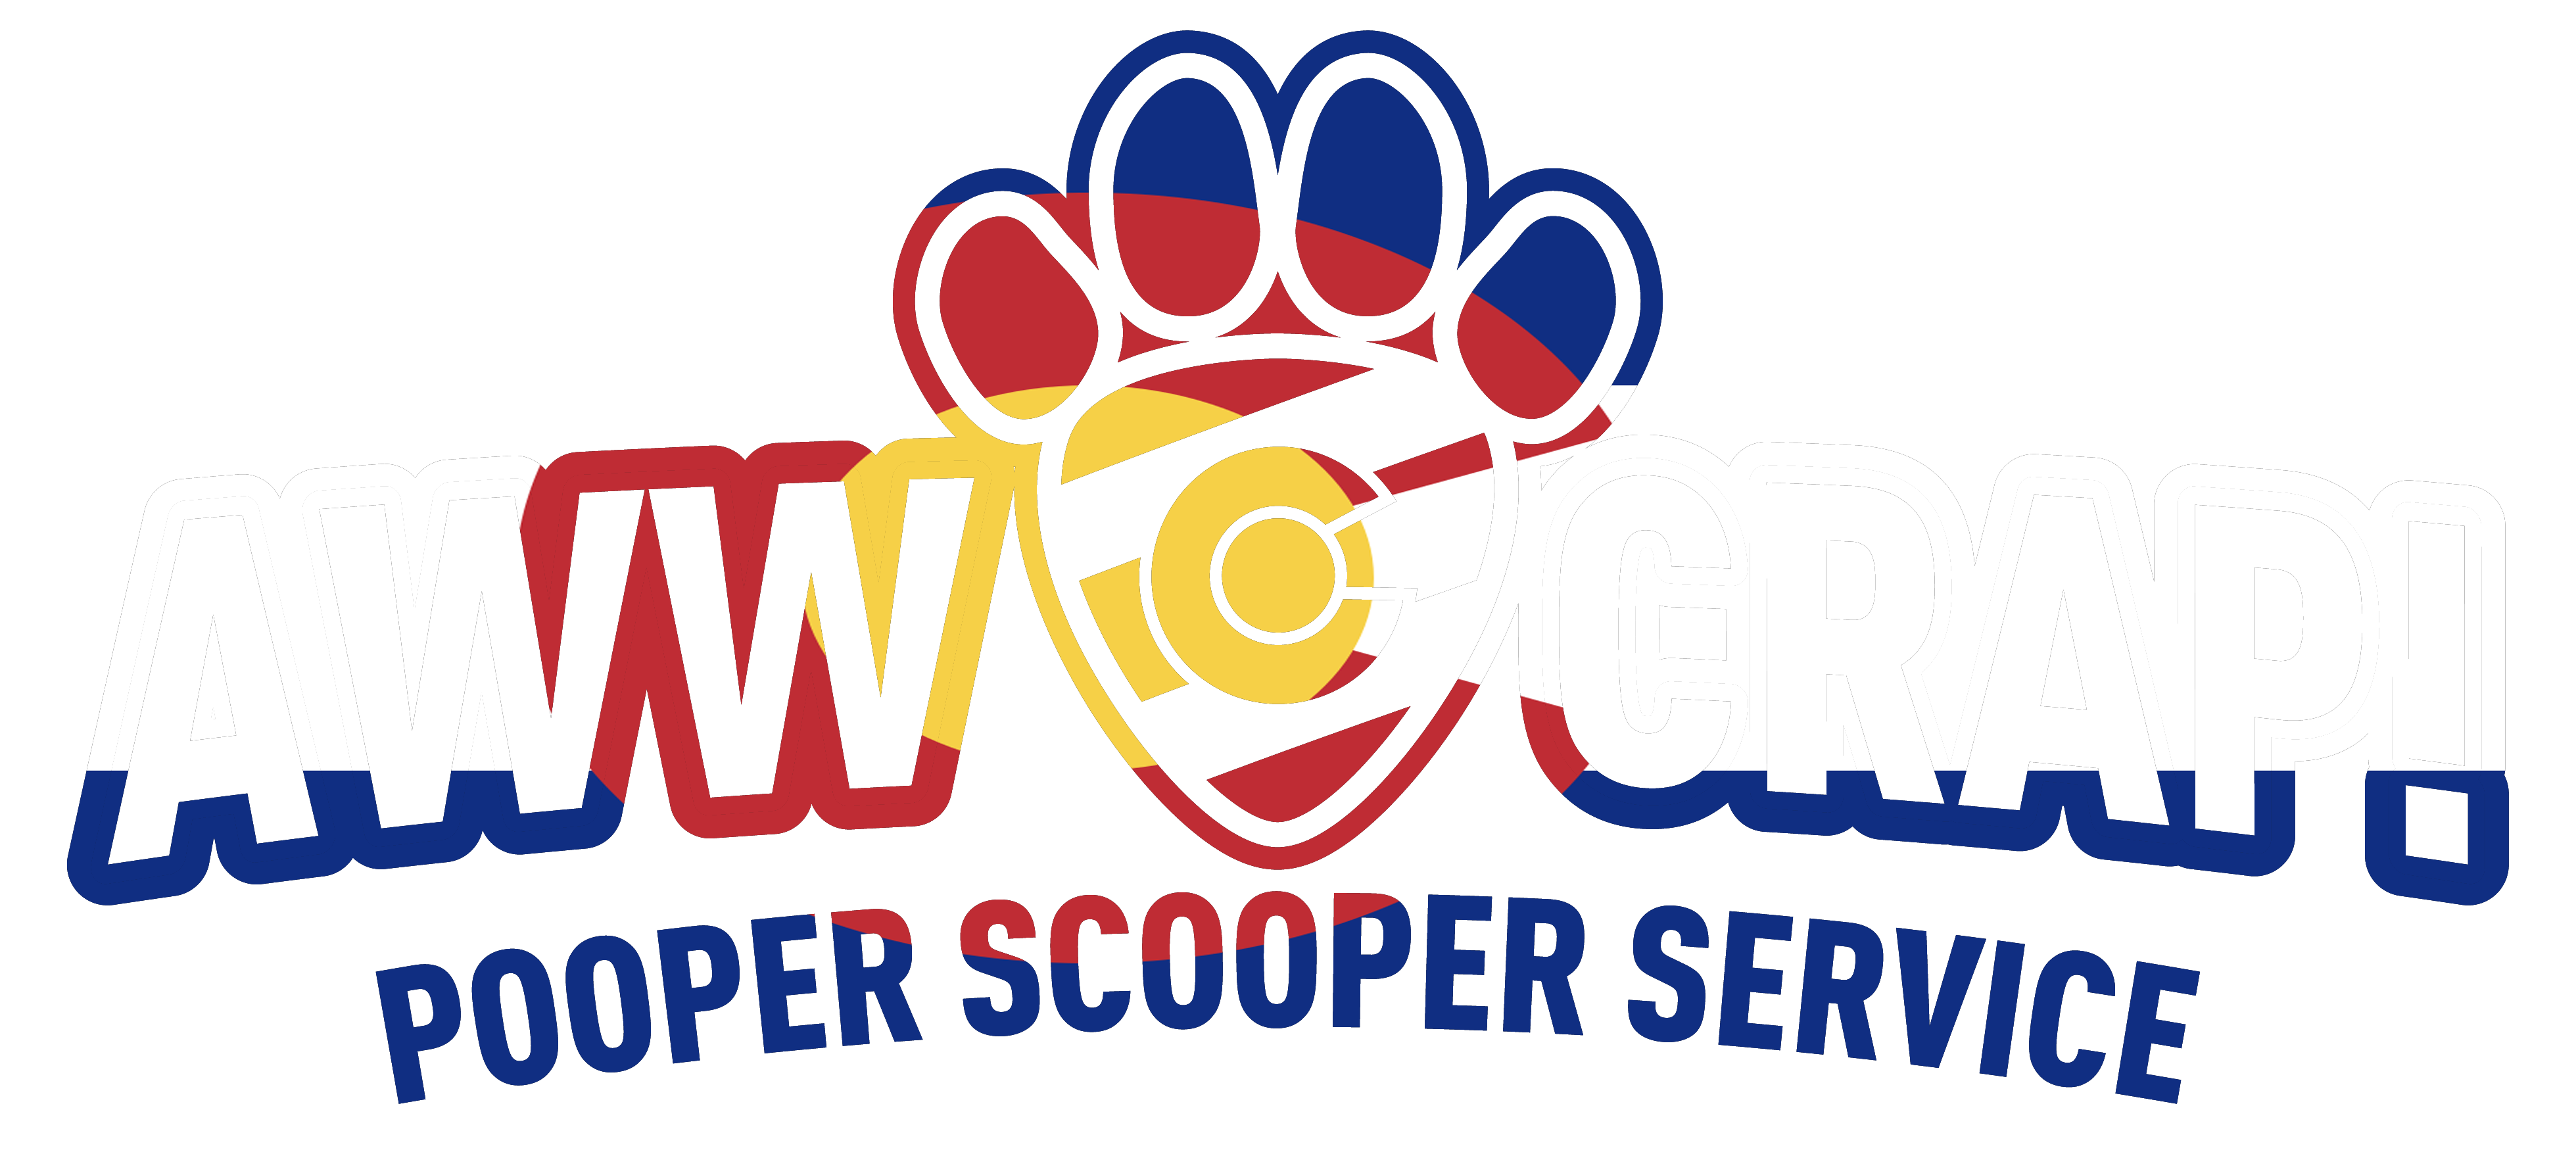 yucko's pooper scooper service